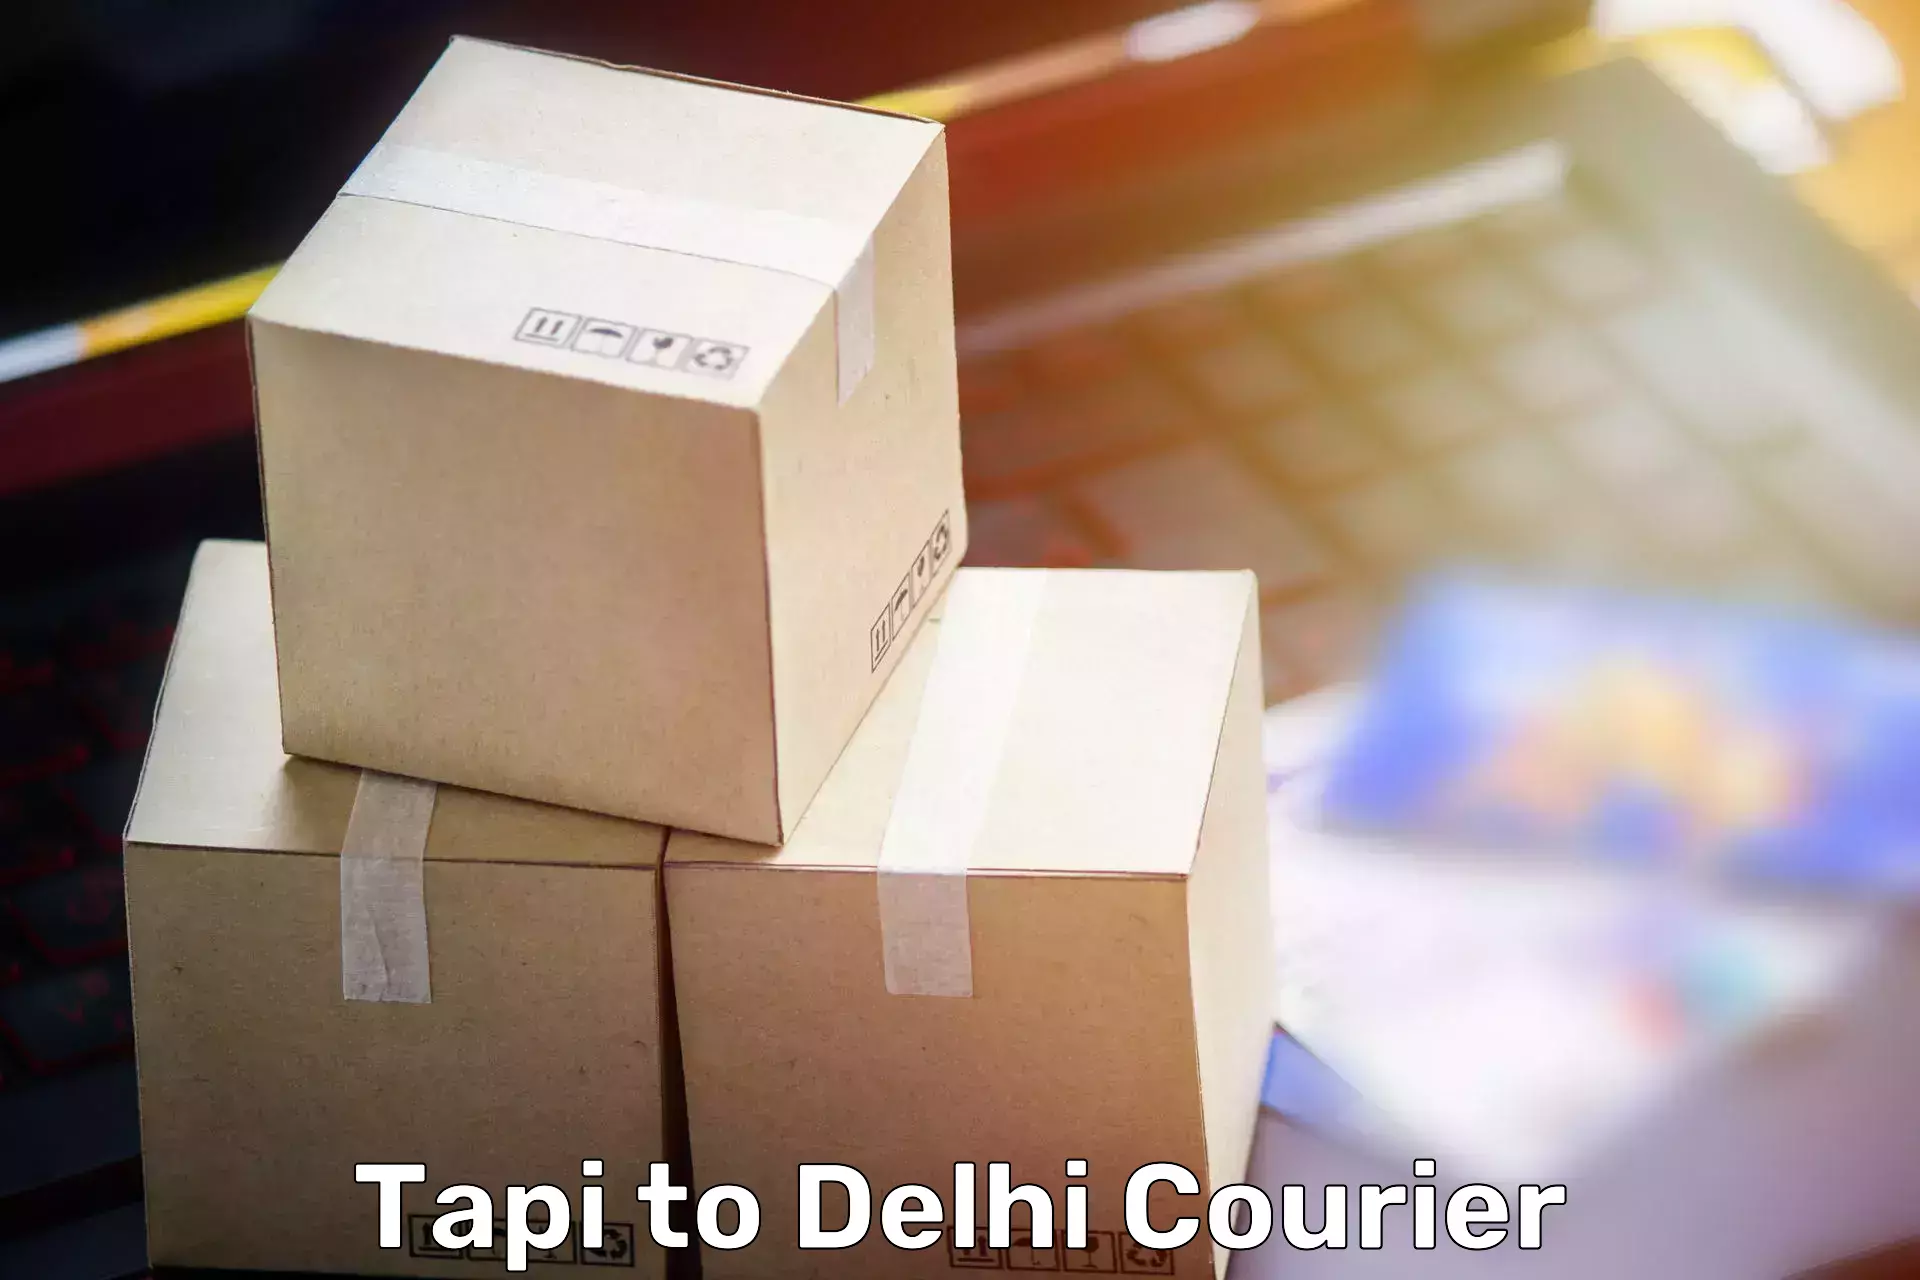 Furniture delivery service Tapi to University of Delhi